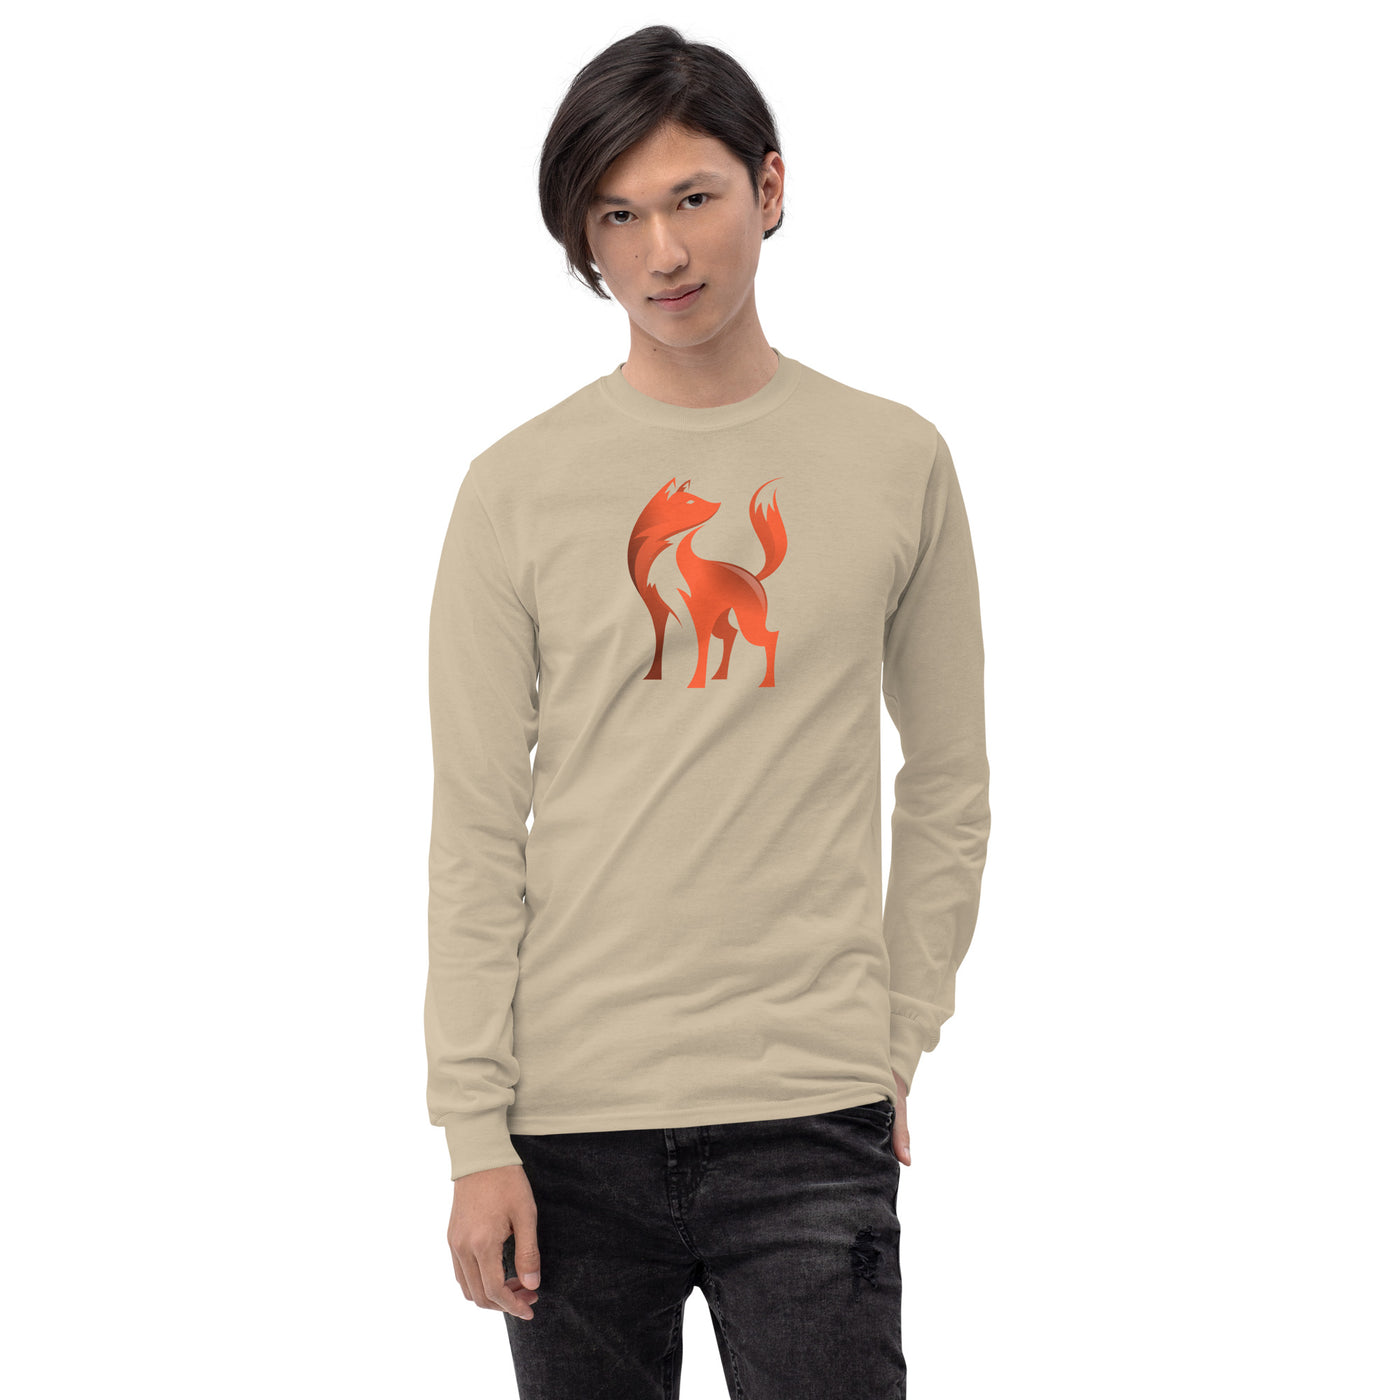 Sly Fox Long-Sleeve T-Shirt